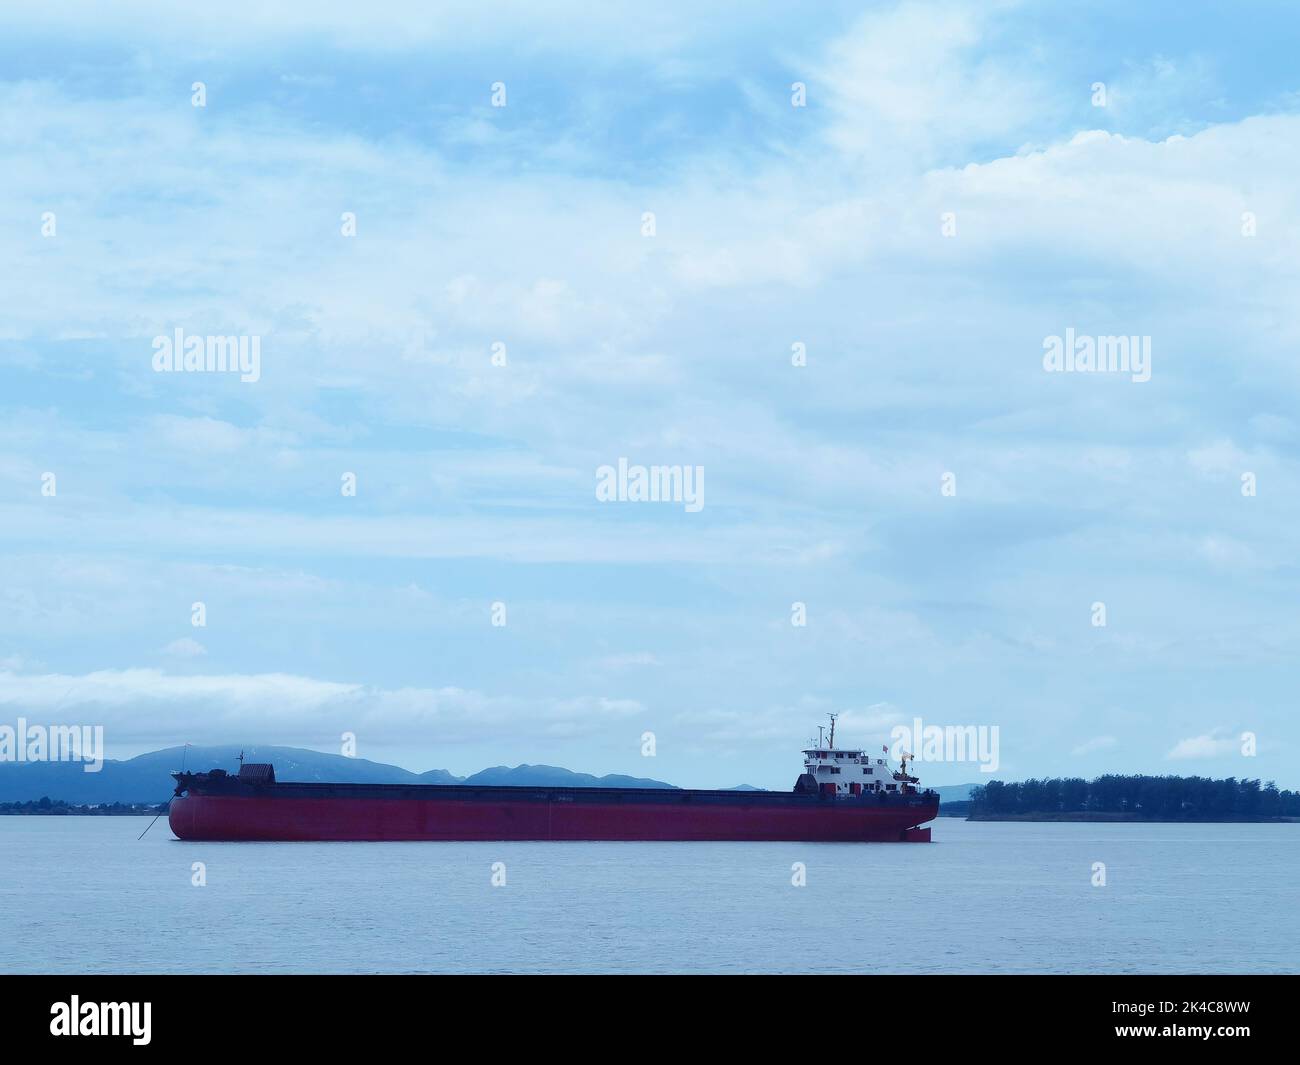 A big cargo ship on the calm ocean transporting supplies Stock Photo